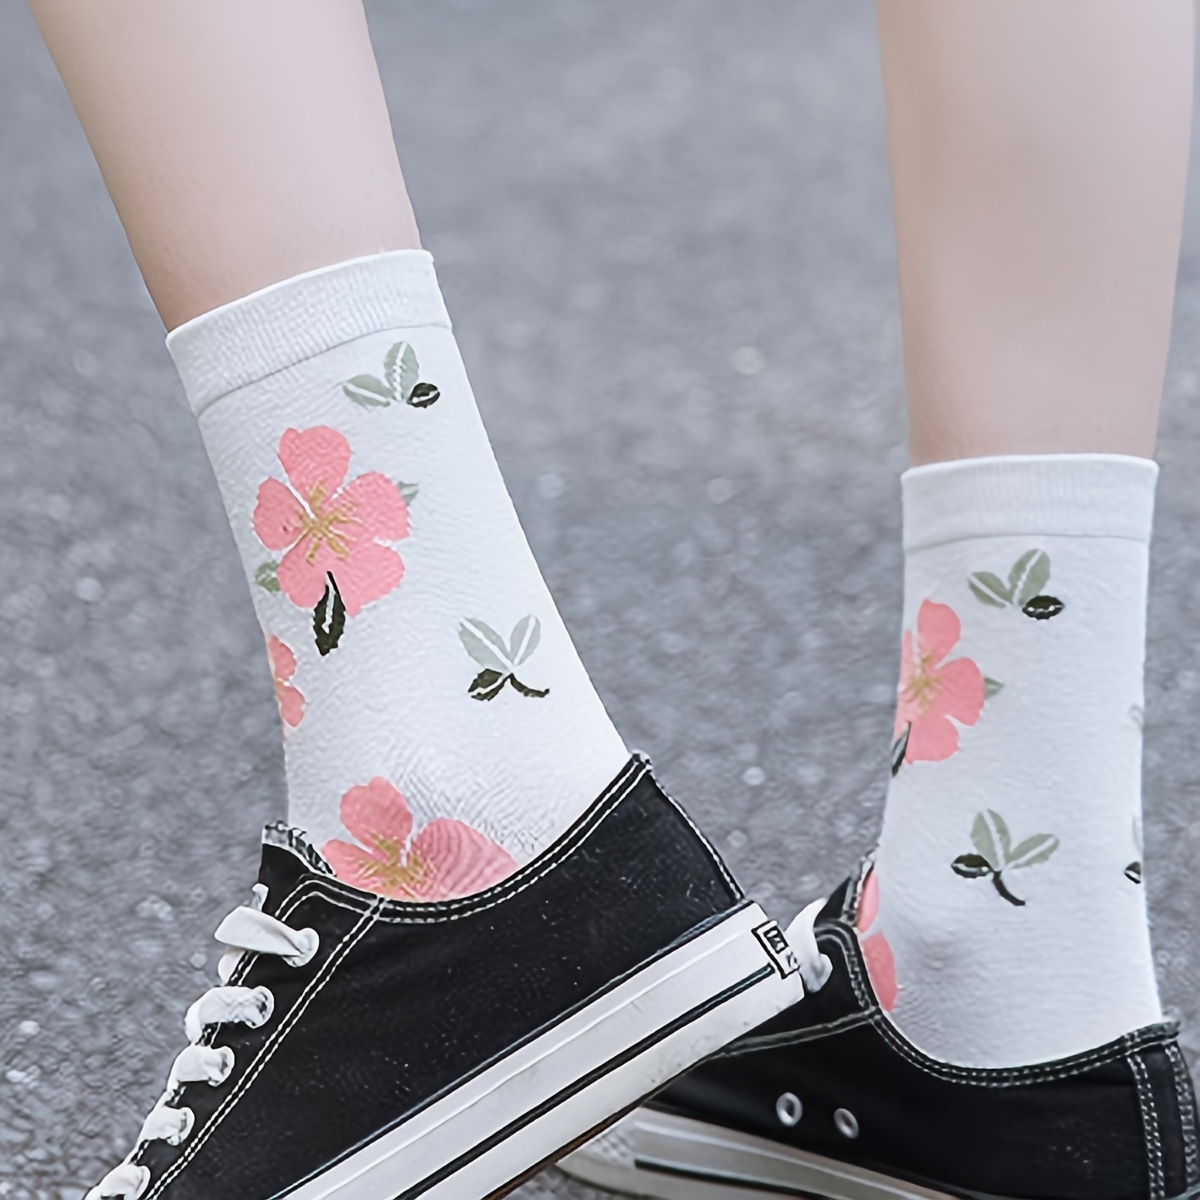 Big Flower Design Cotton Socks 